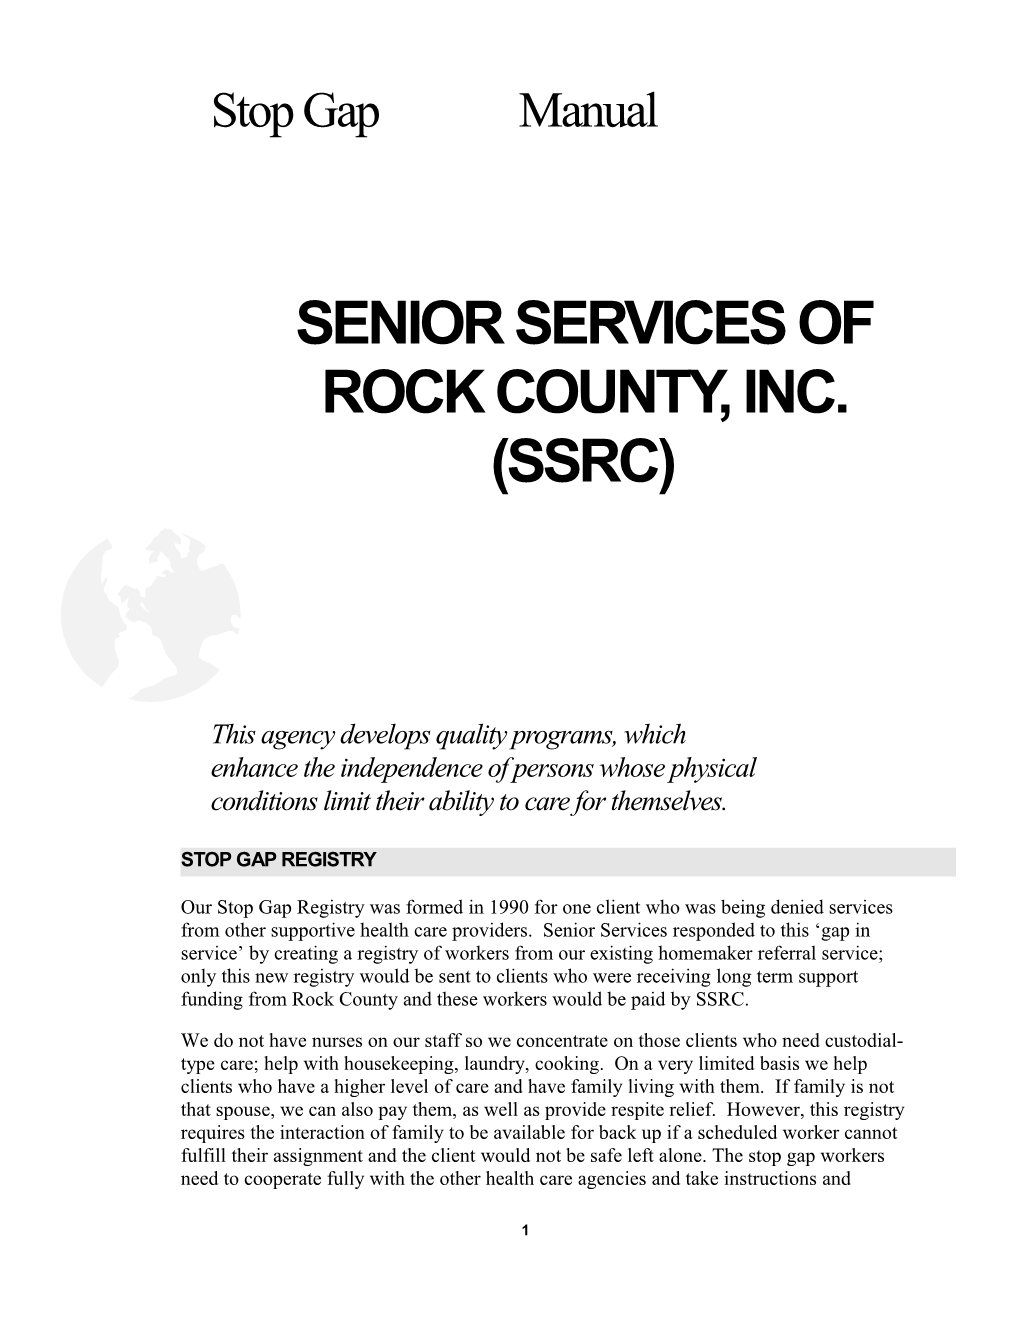 Senior Services of Rock County, Inc. (Ssrc)